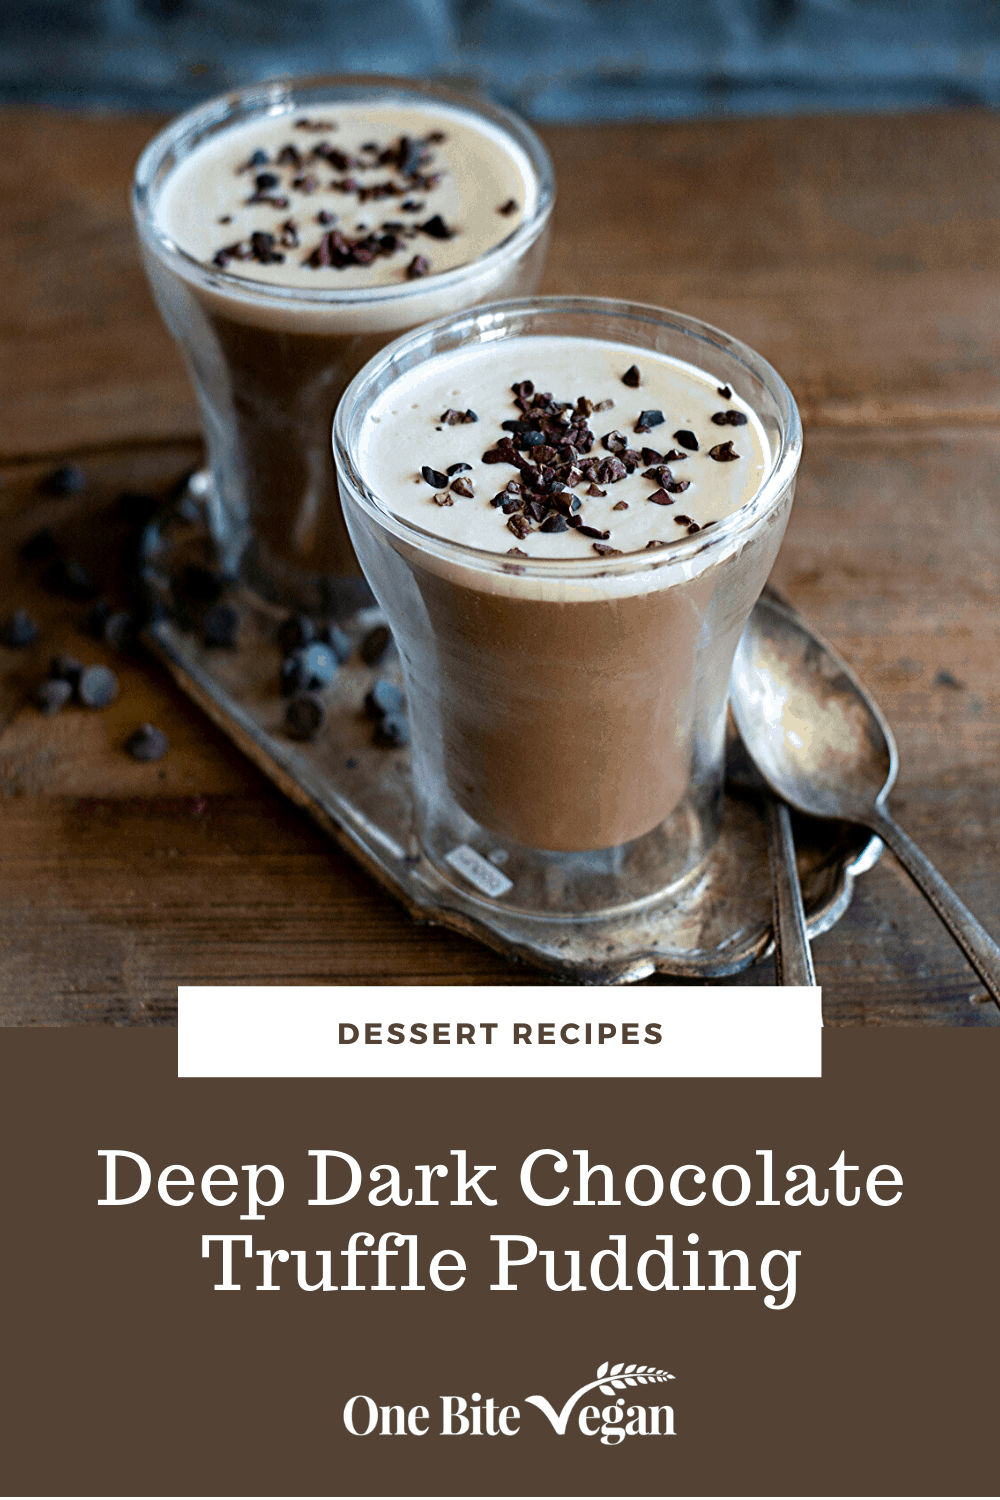 Deep dark chocolate truffle pudding